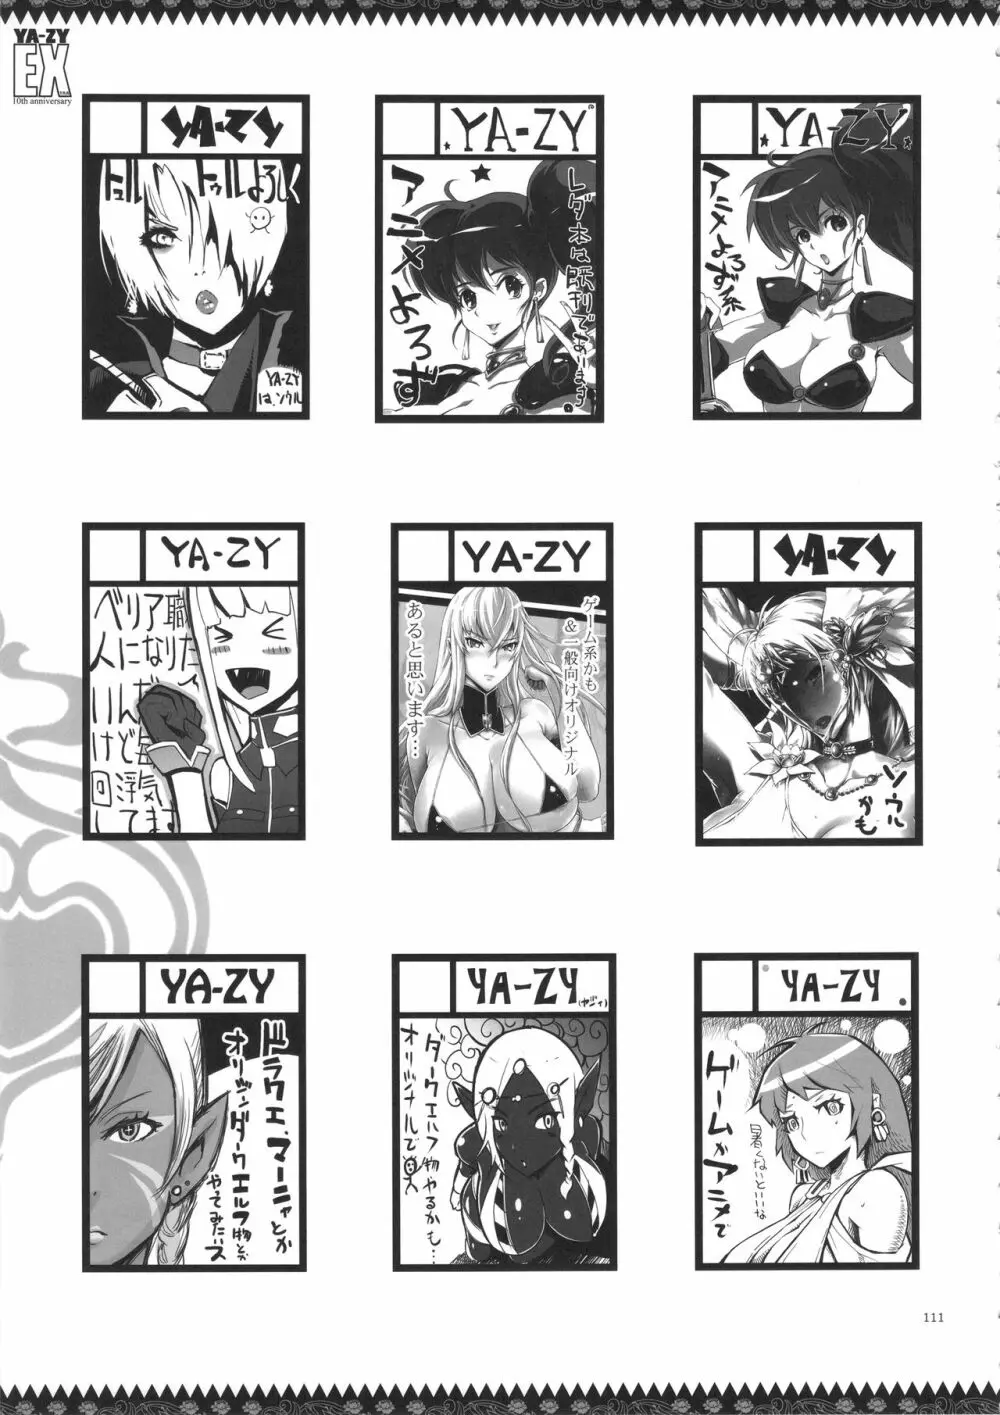 YA-ZY EX 10th anniversary - page110